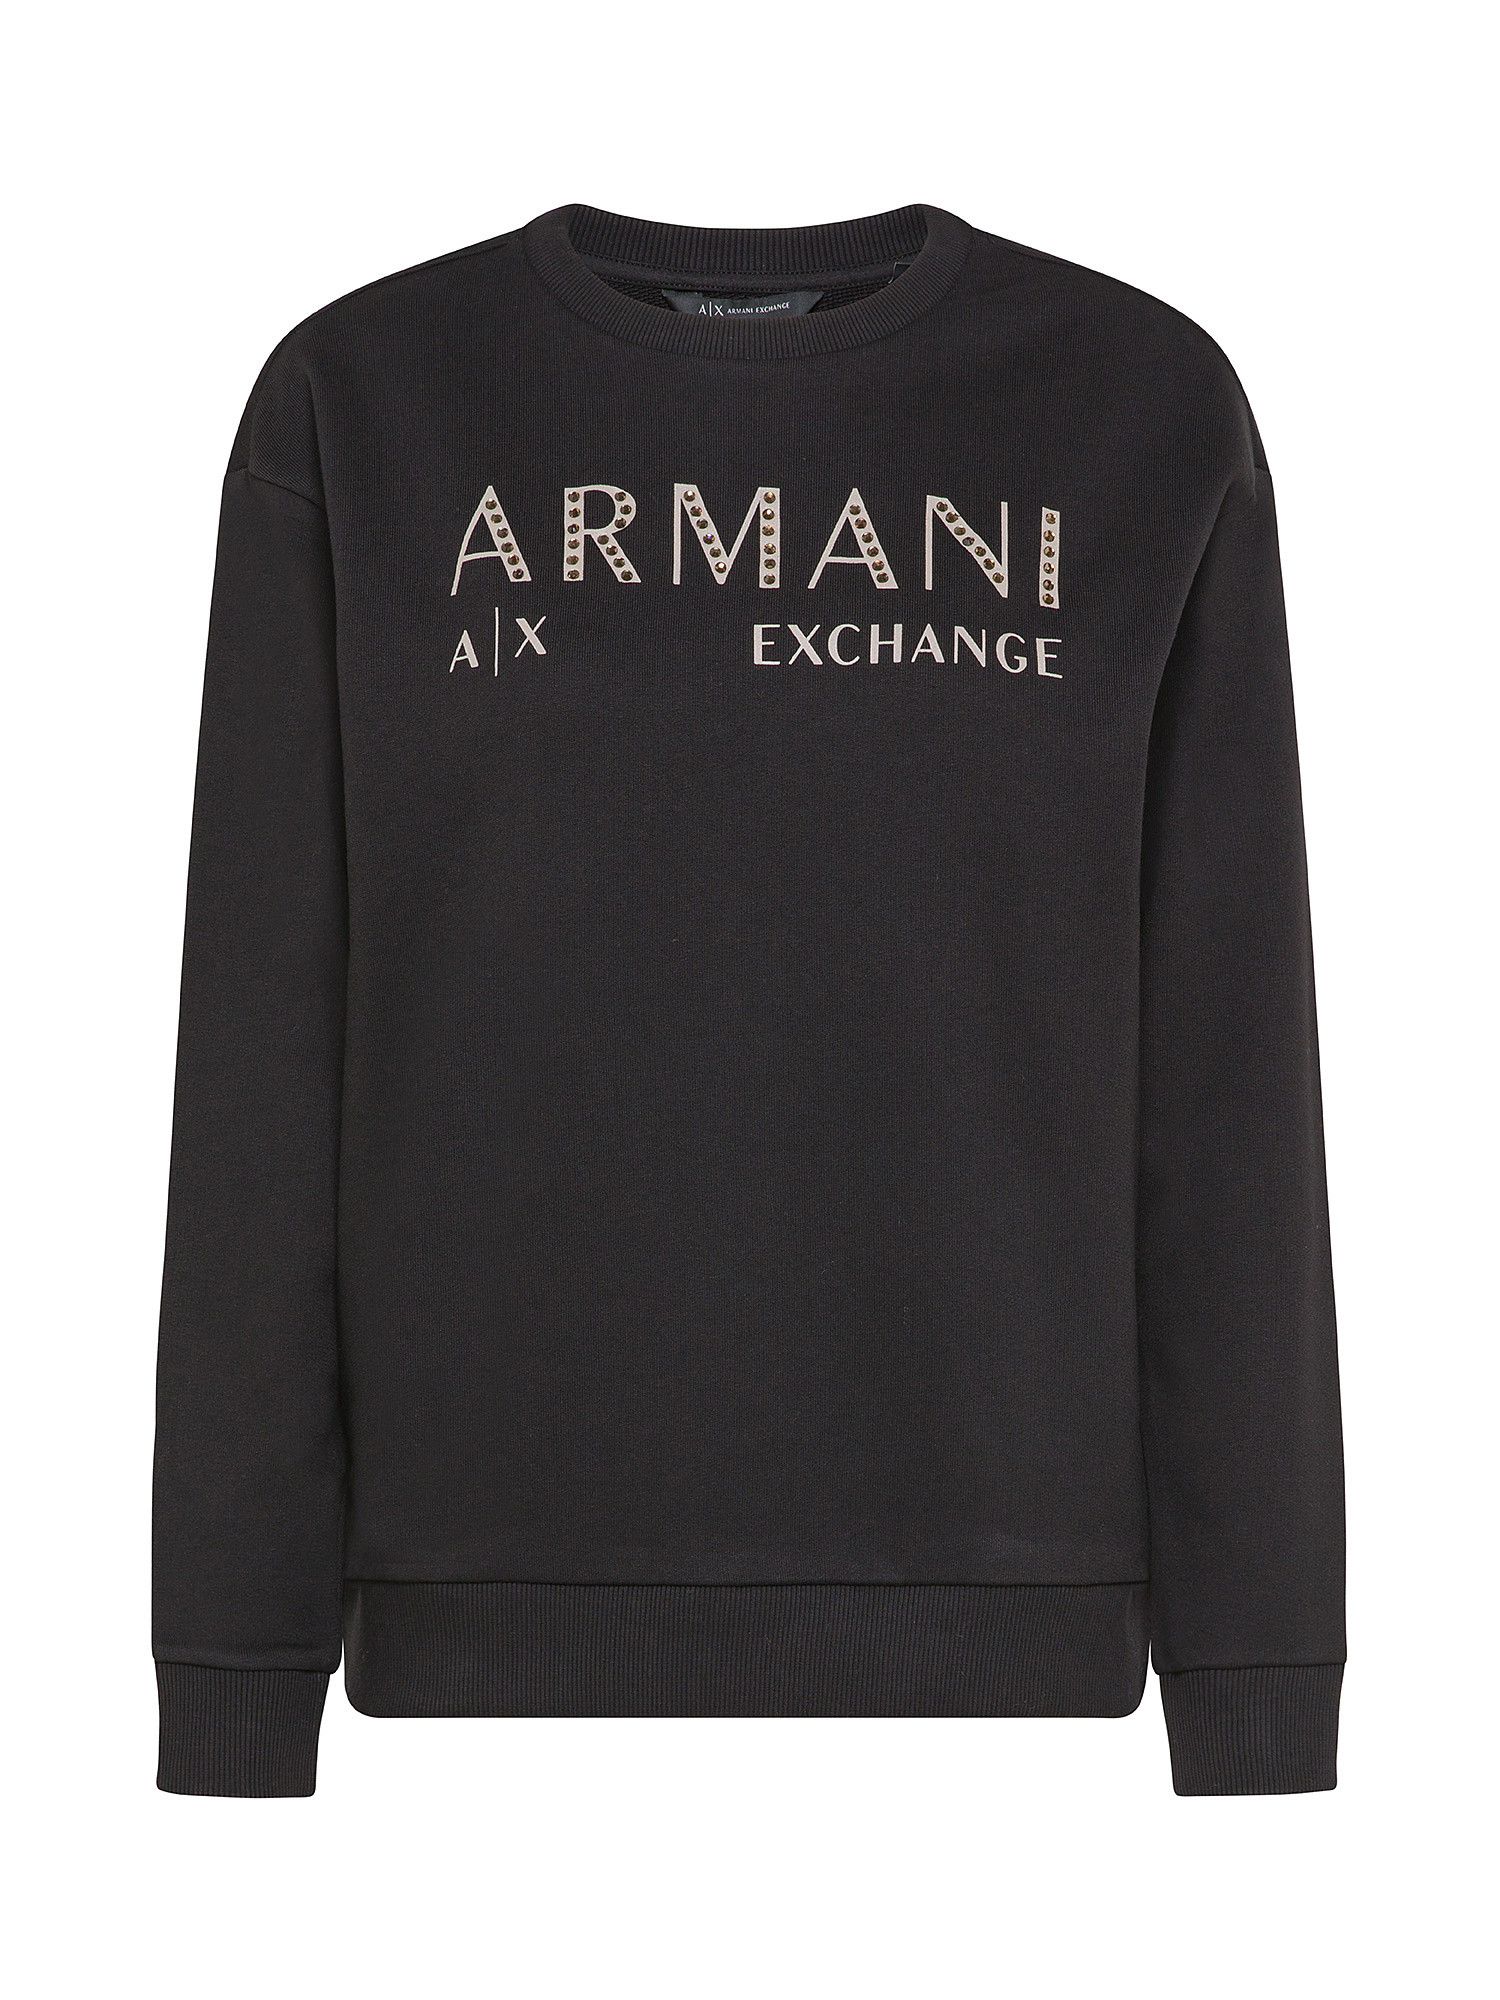 Armani Exchange - Sweatshirt with logo, Black, large image number 0